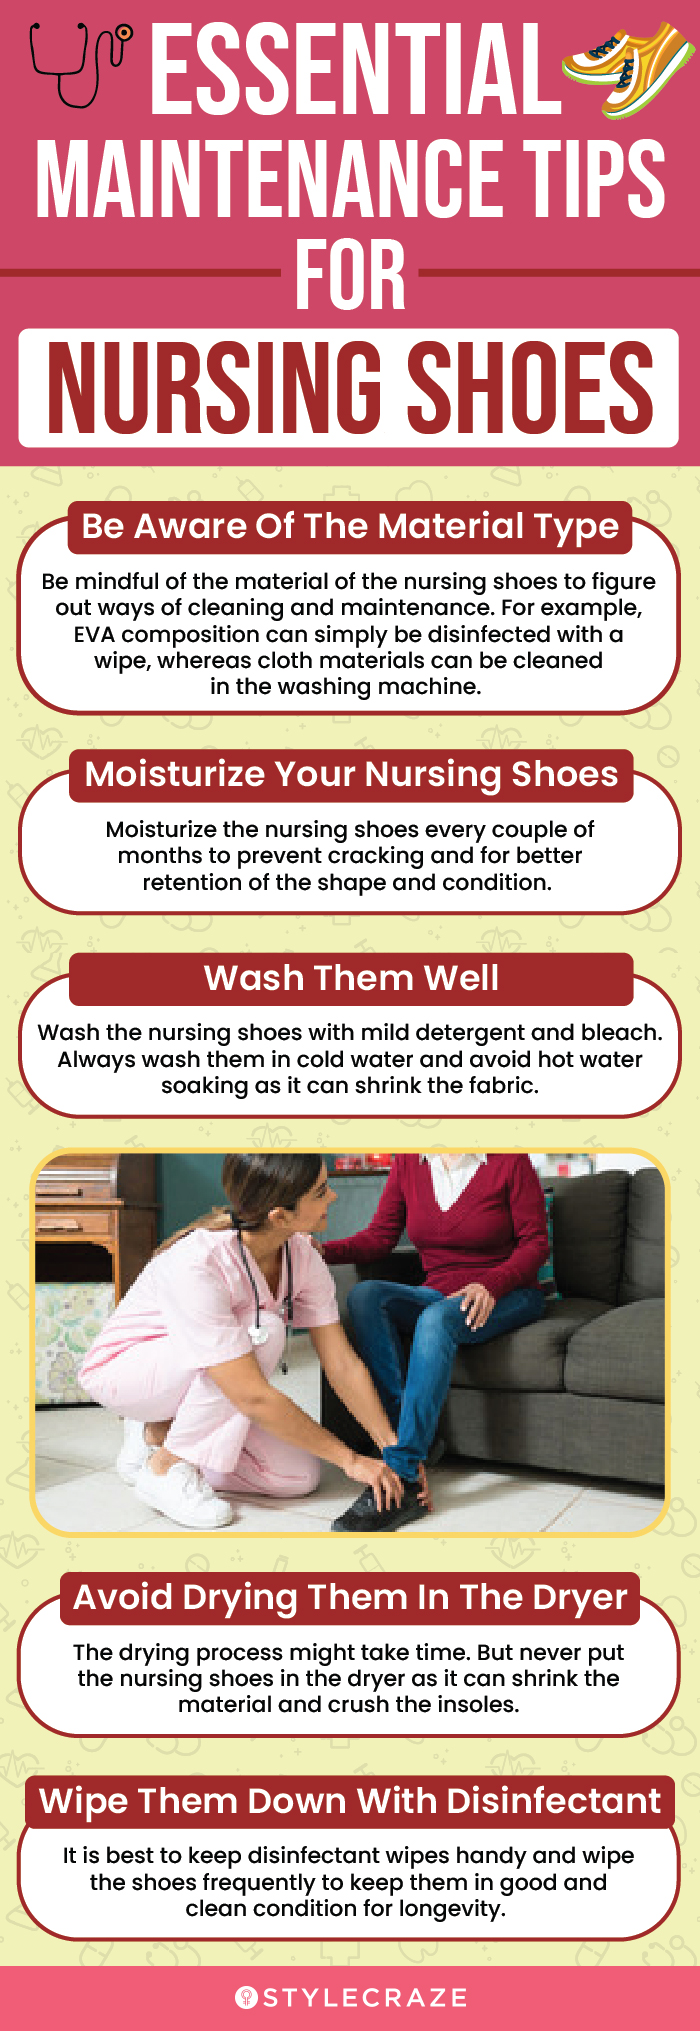 Essential Maintenace Tips For Nursing Shoes (infographic)